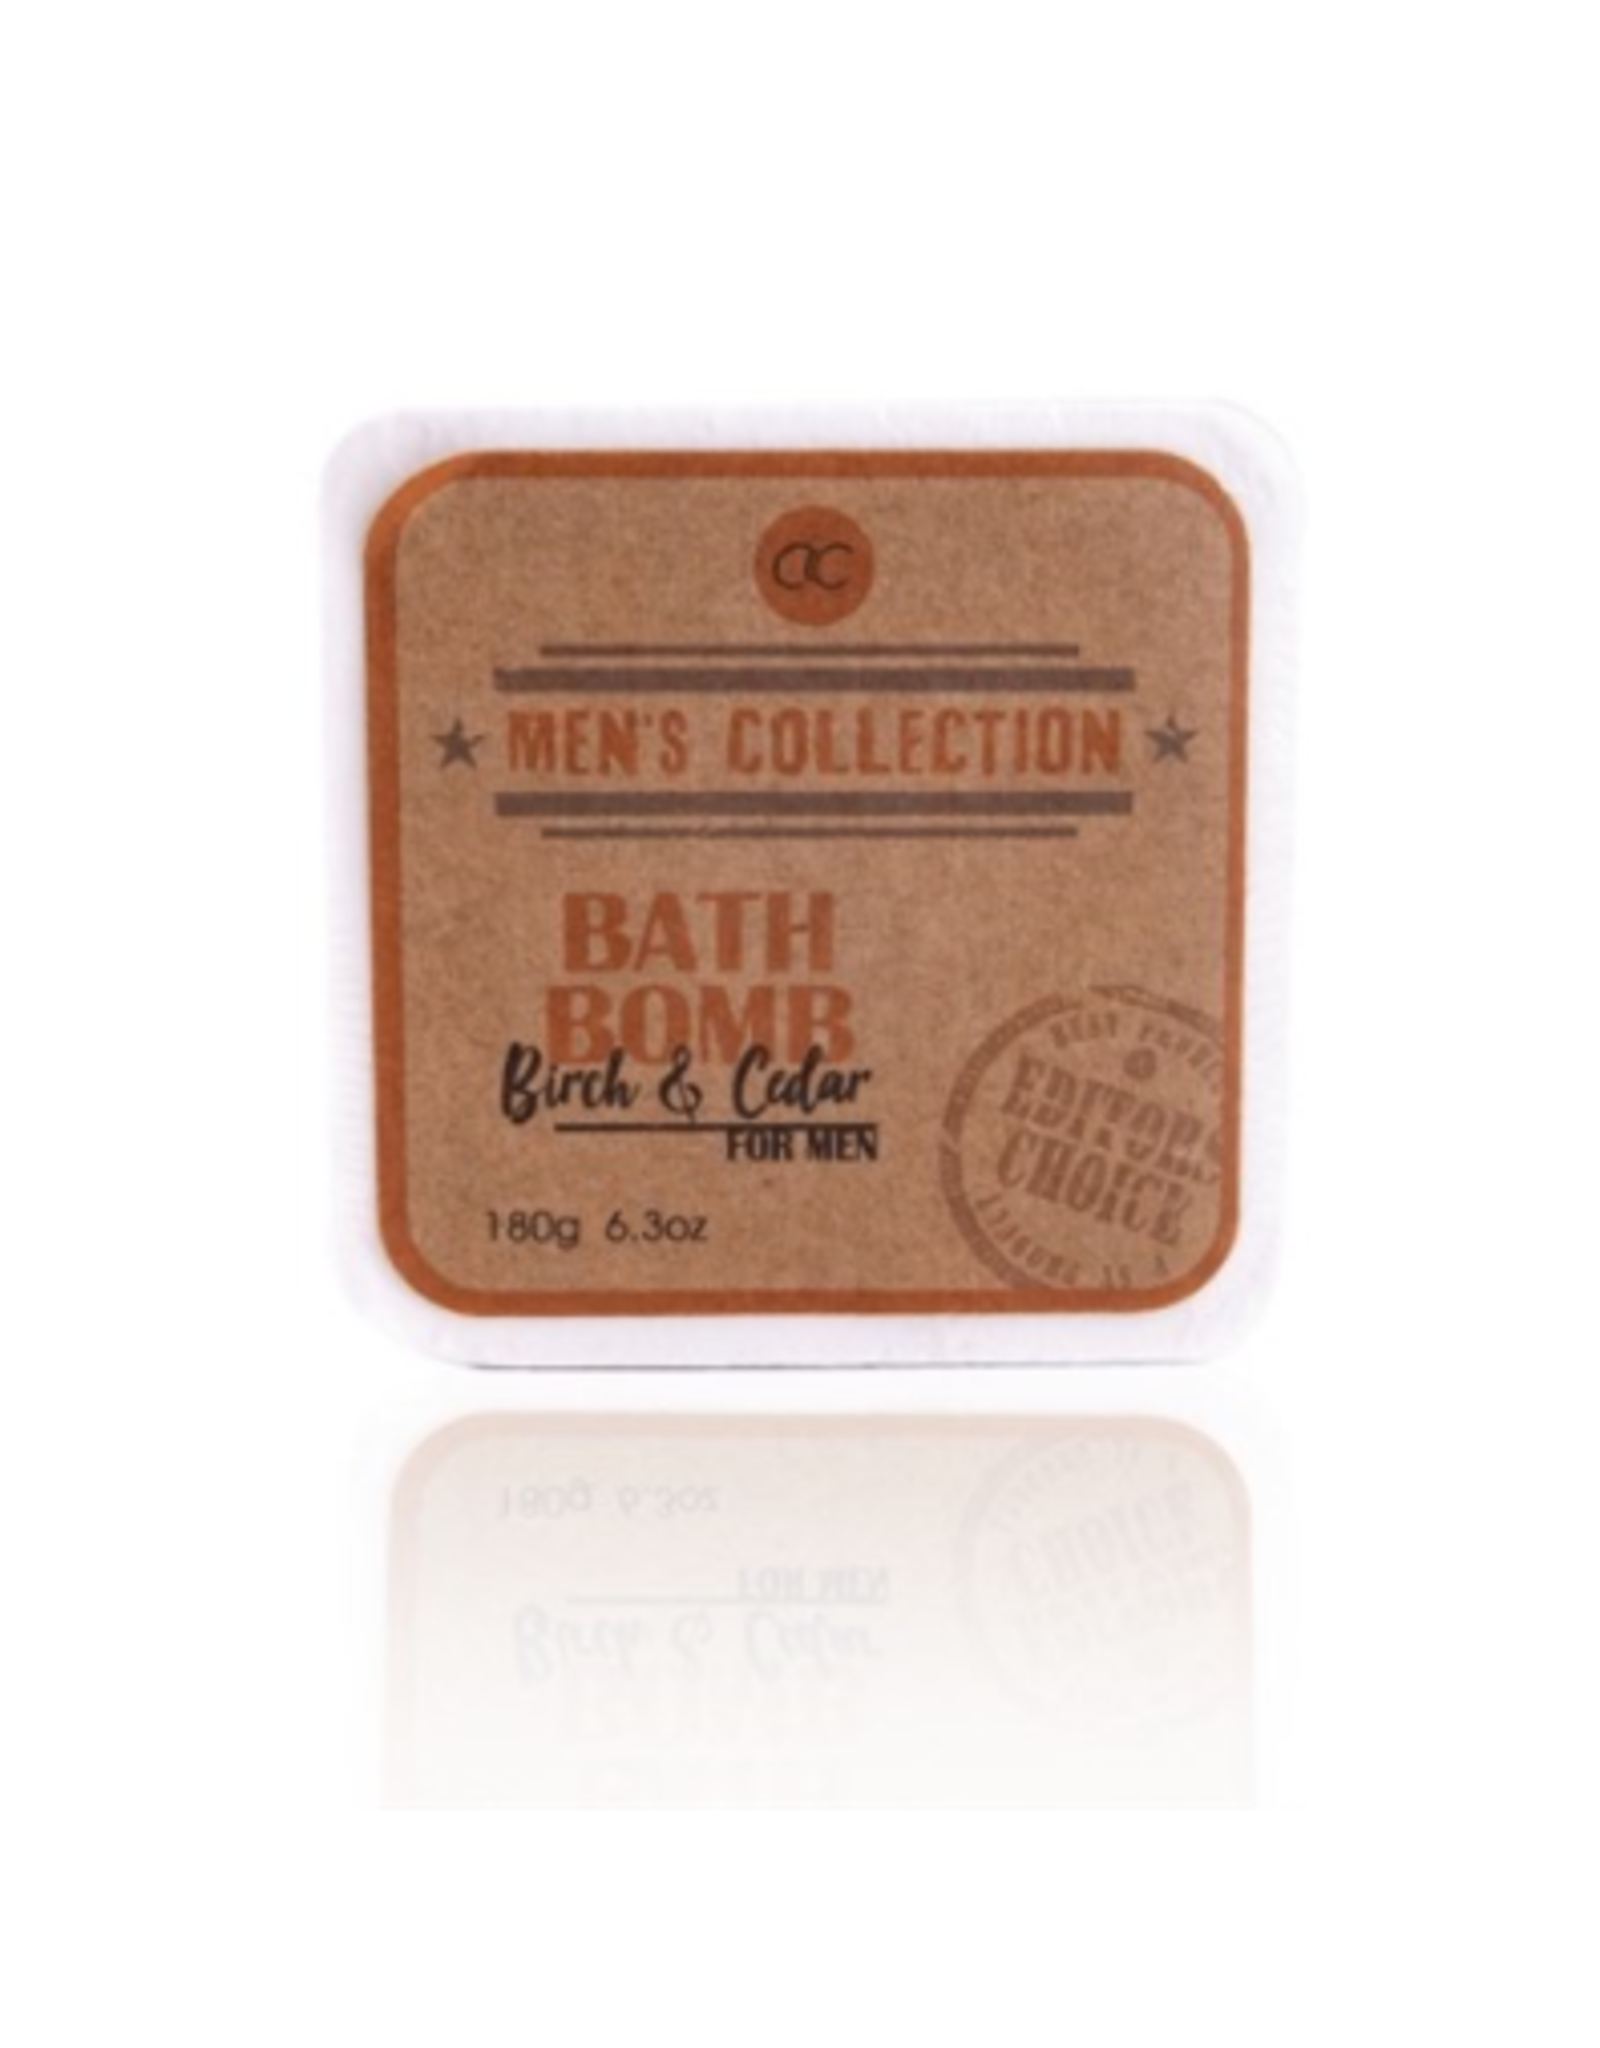 Men's Collection badbruiser/fizzer 180g - Body & Soap